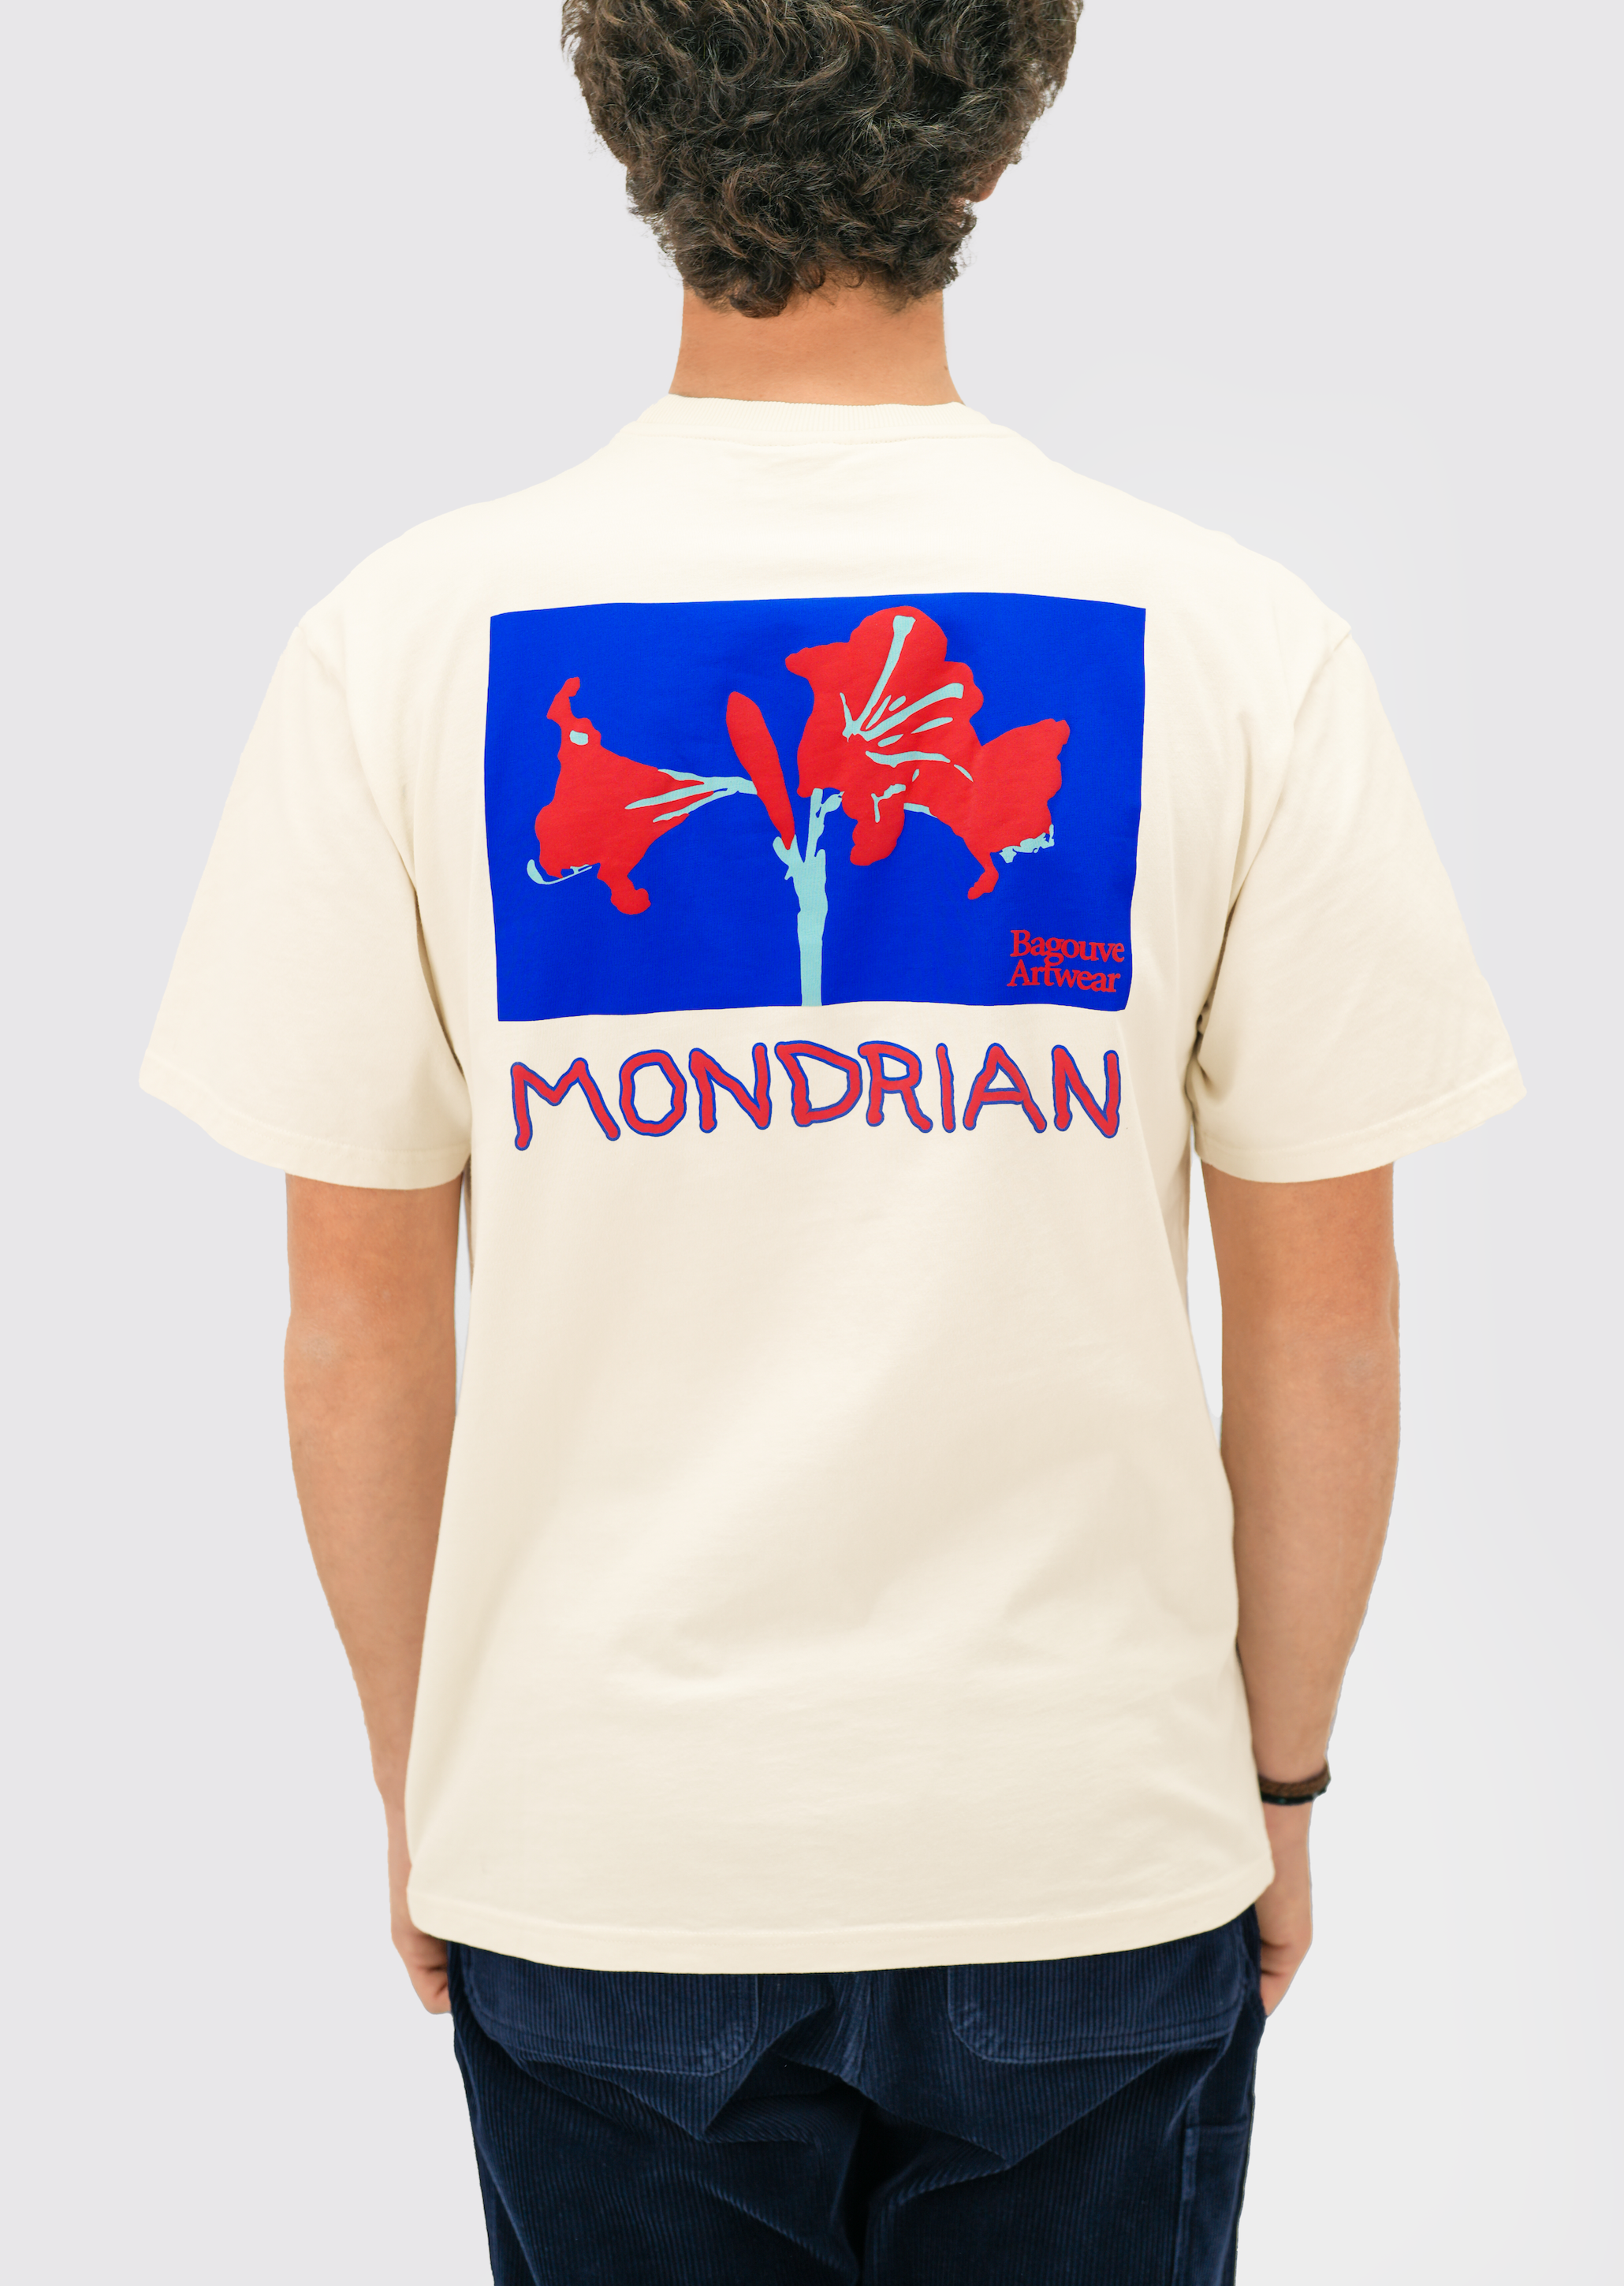 MONDRIAN T-SHIRT